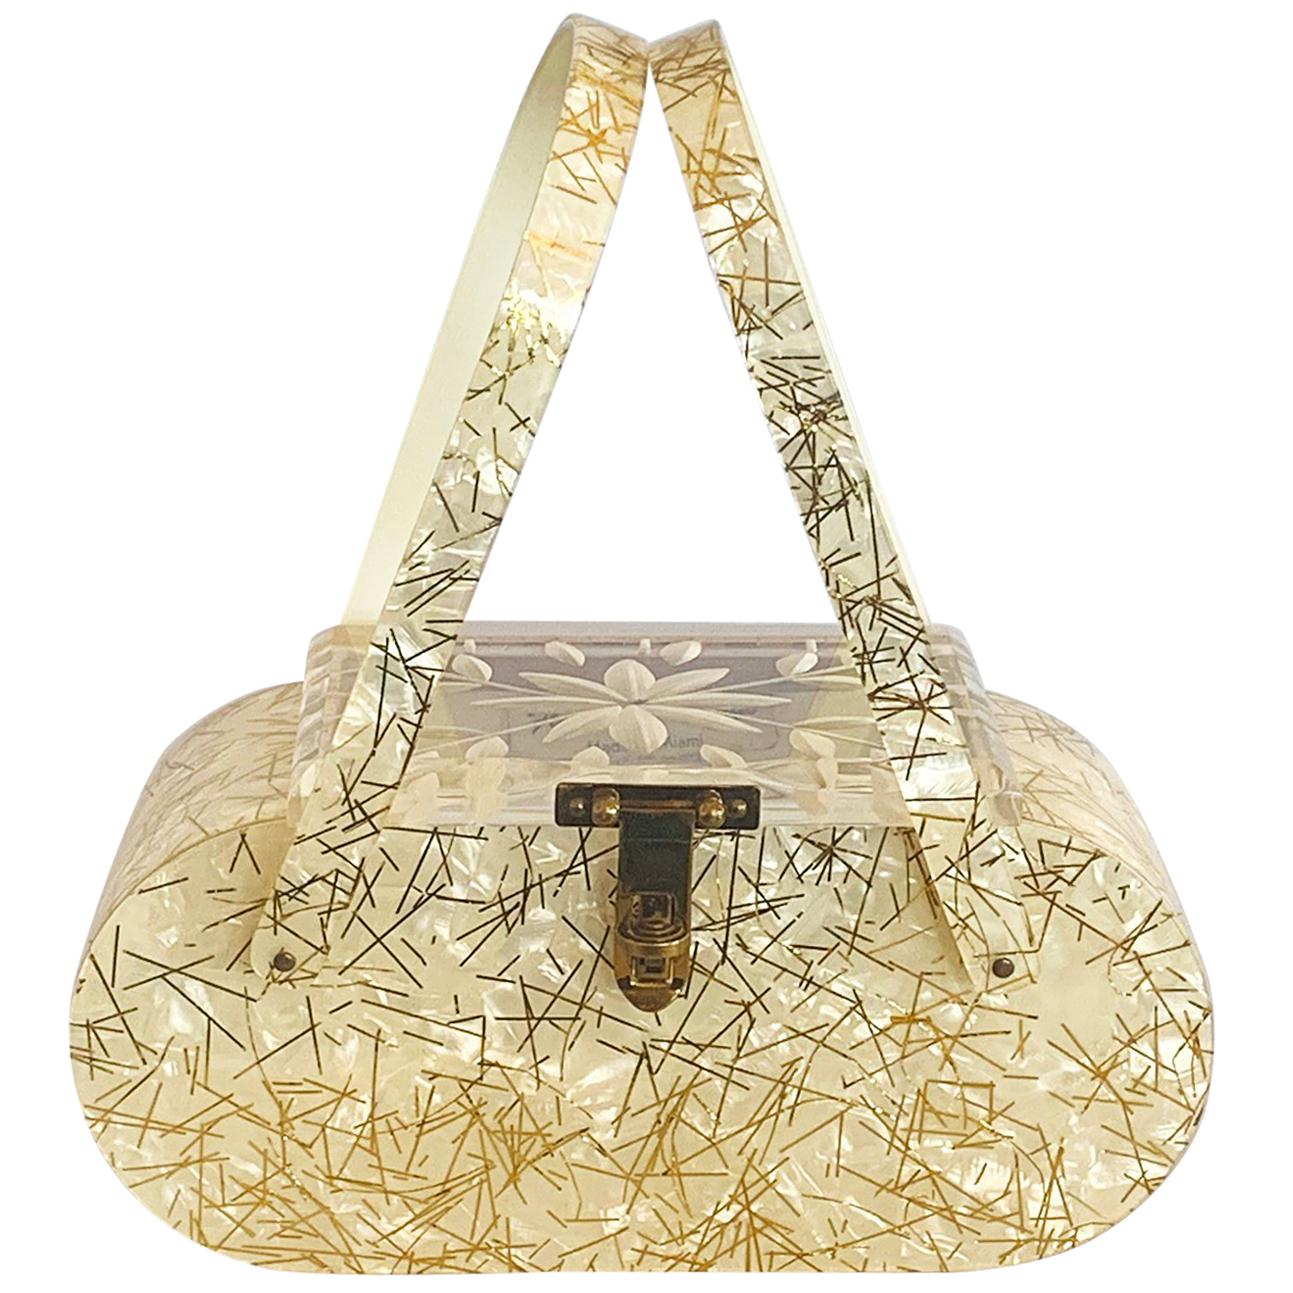 1950s Confetti Lucite bag handbag purse by Florida Handbags Miami